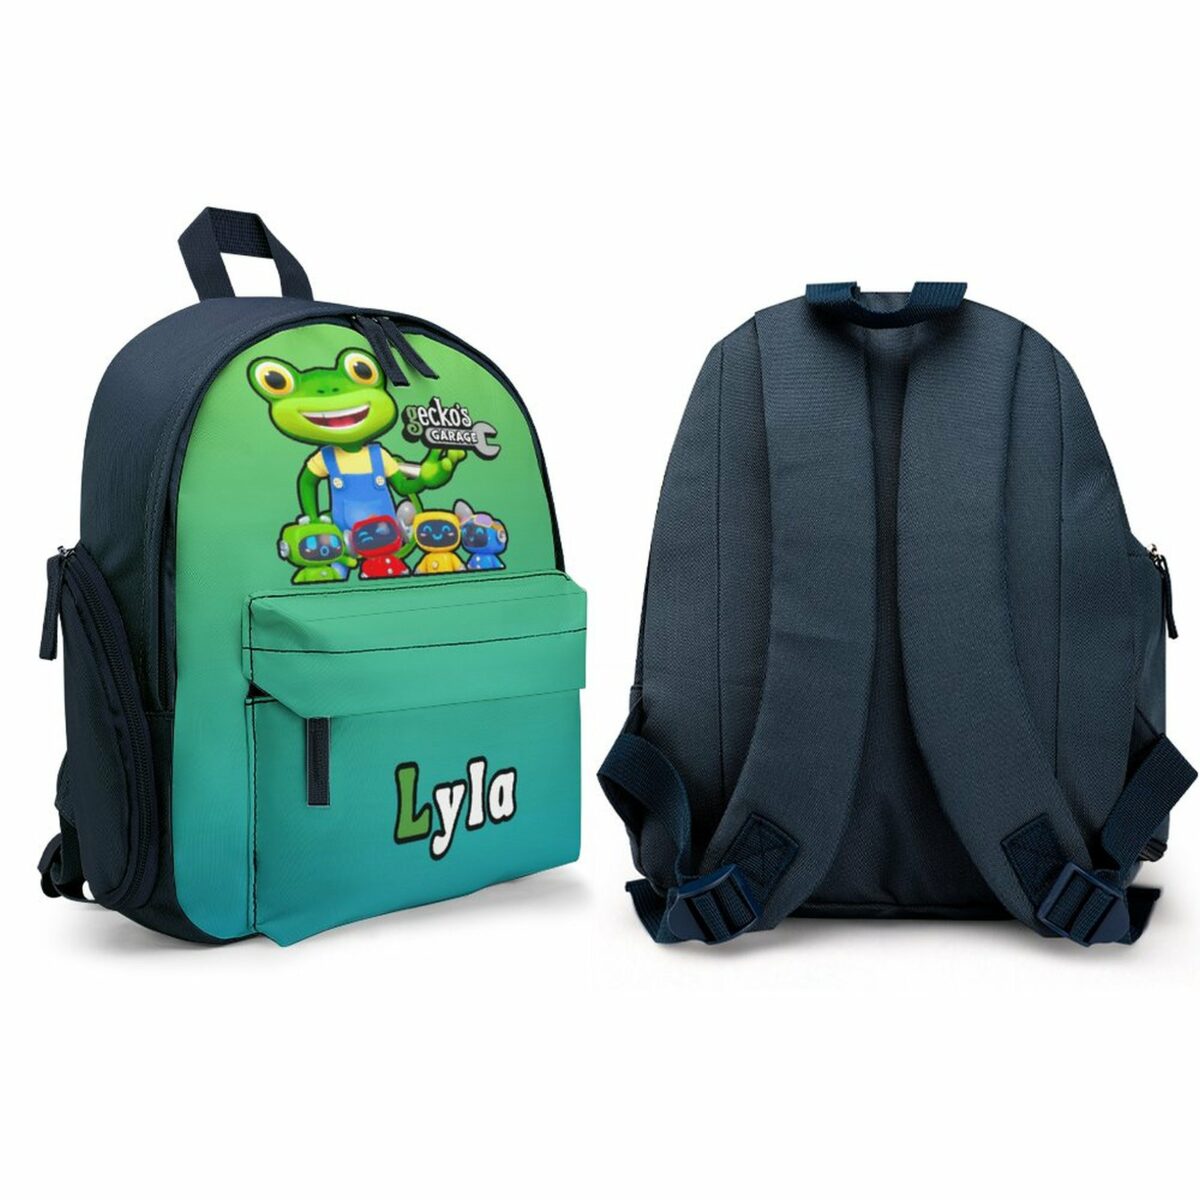 Gecko’s Garage Animated Series Character Children’s School Bag Cool Kiddo 22